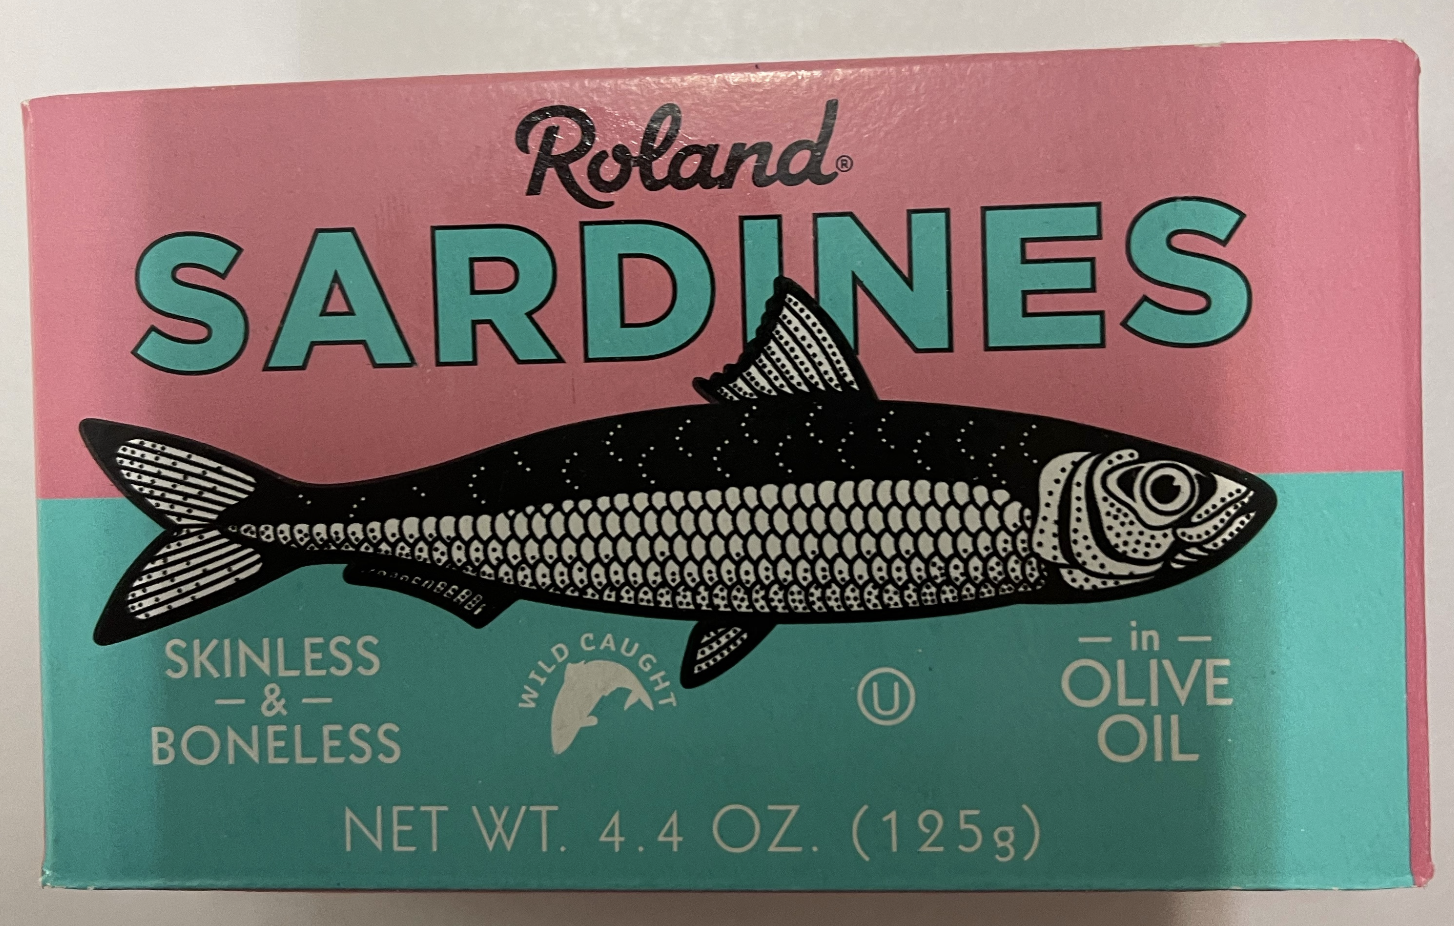 Skinless / Boneless Sardines 4.4 oz. Roland